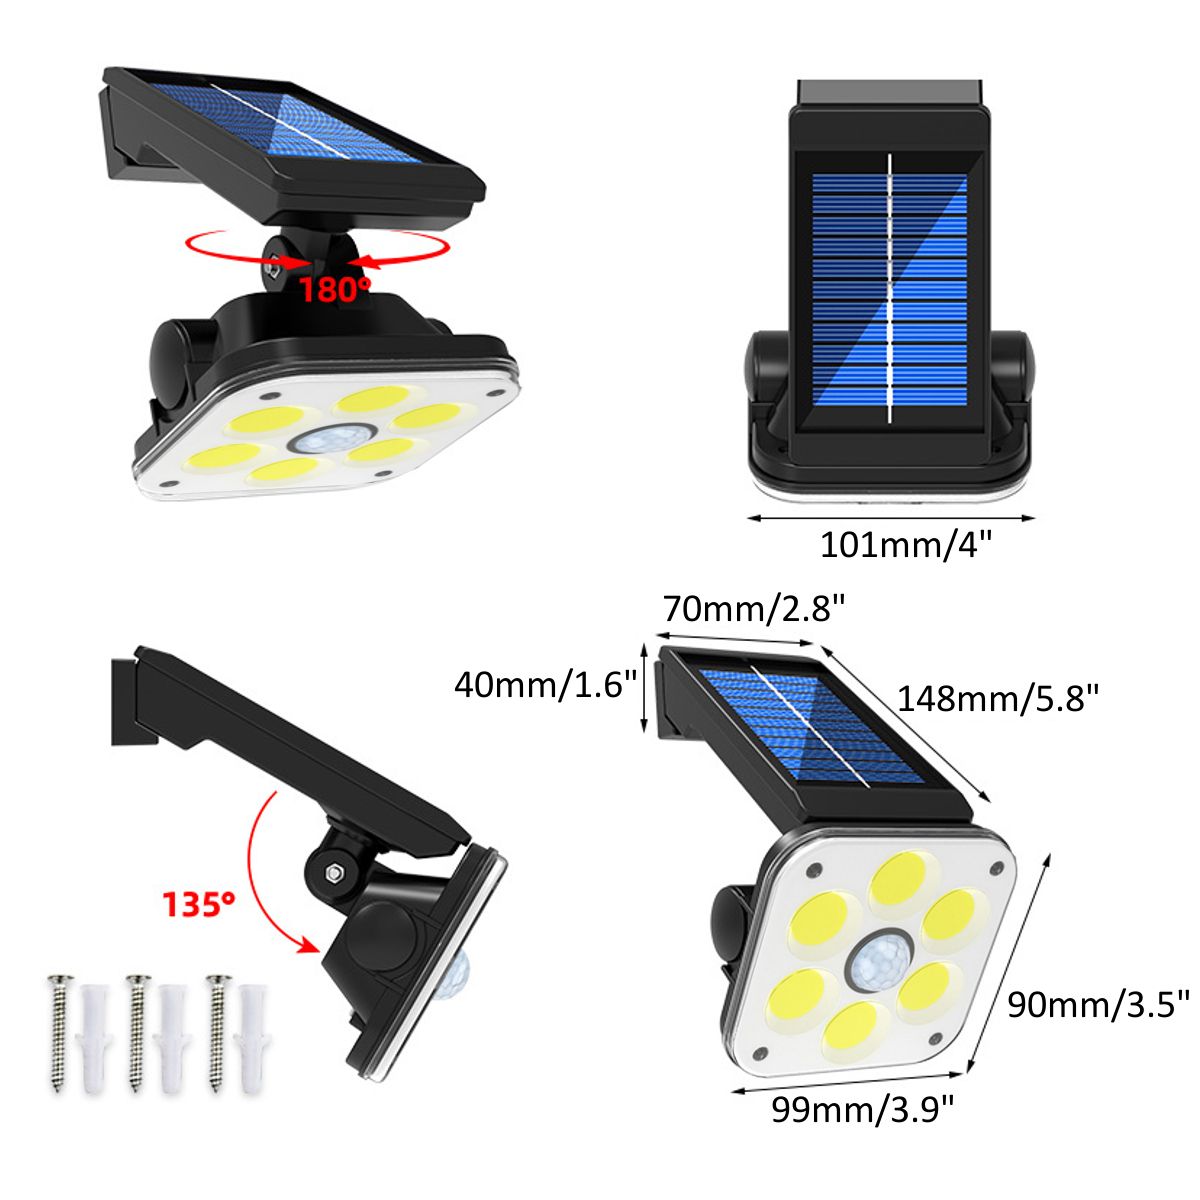 54COB-Solar-Motion-Sensor-Lights-Security-Wall-Lamp-Floodlight-Outdoor-Waterproof-1756512